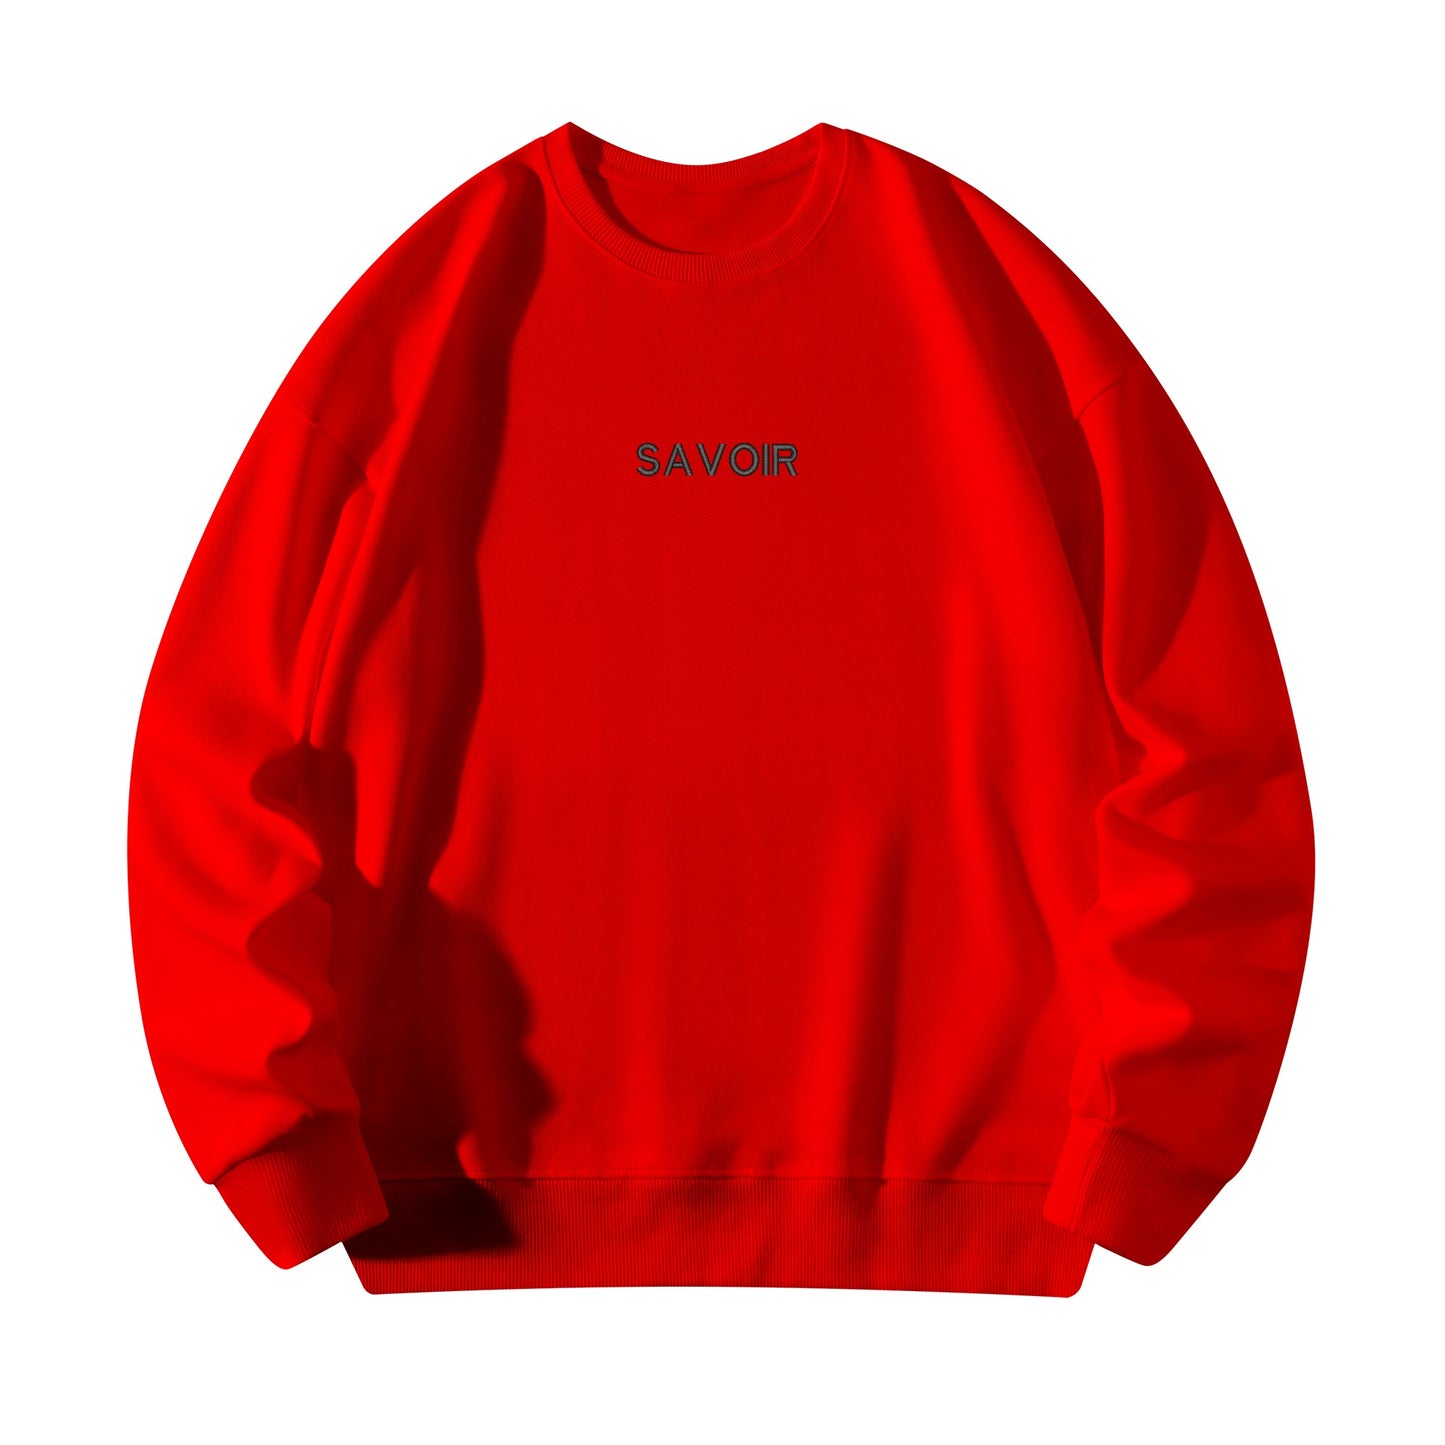 Savoir Sweater